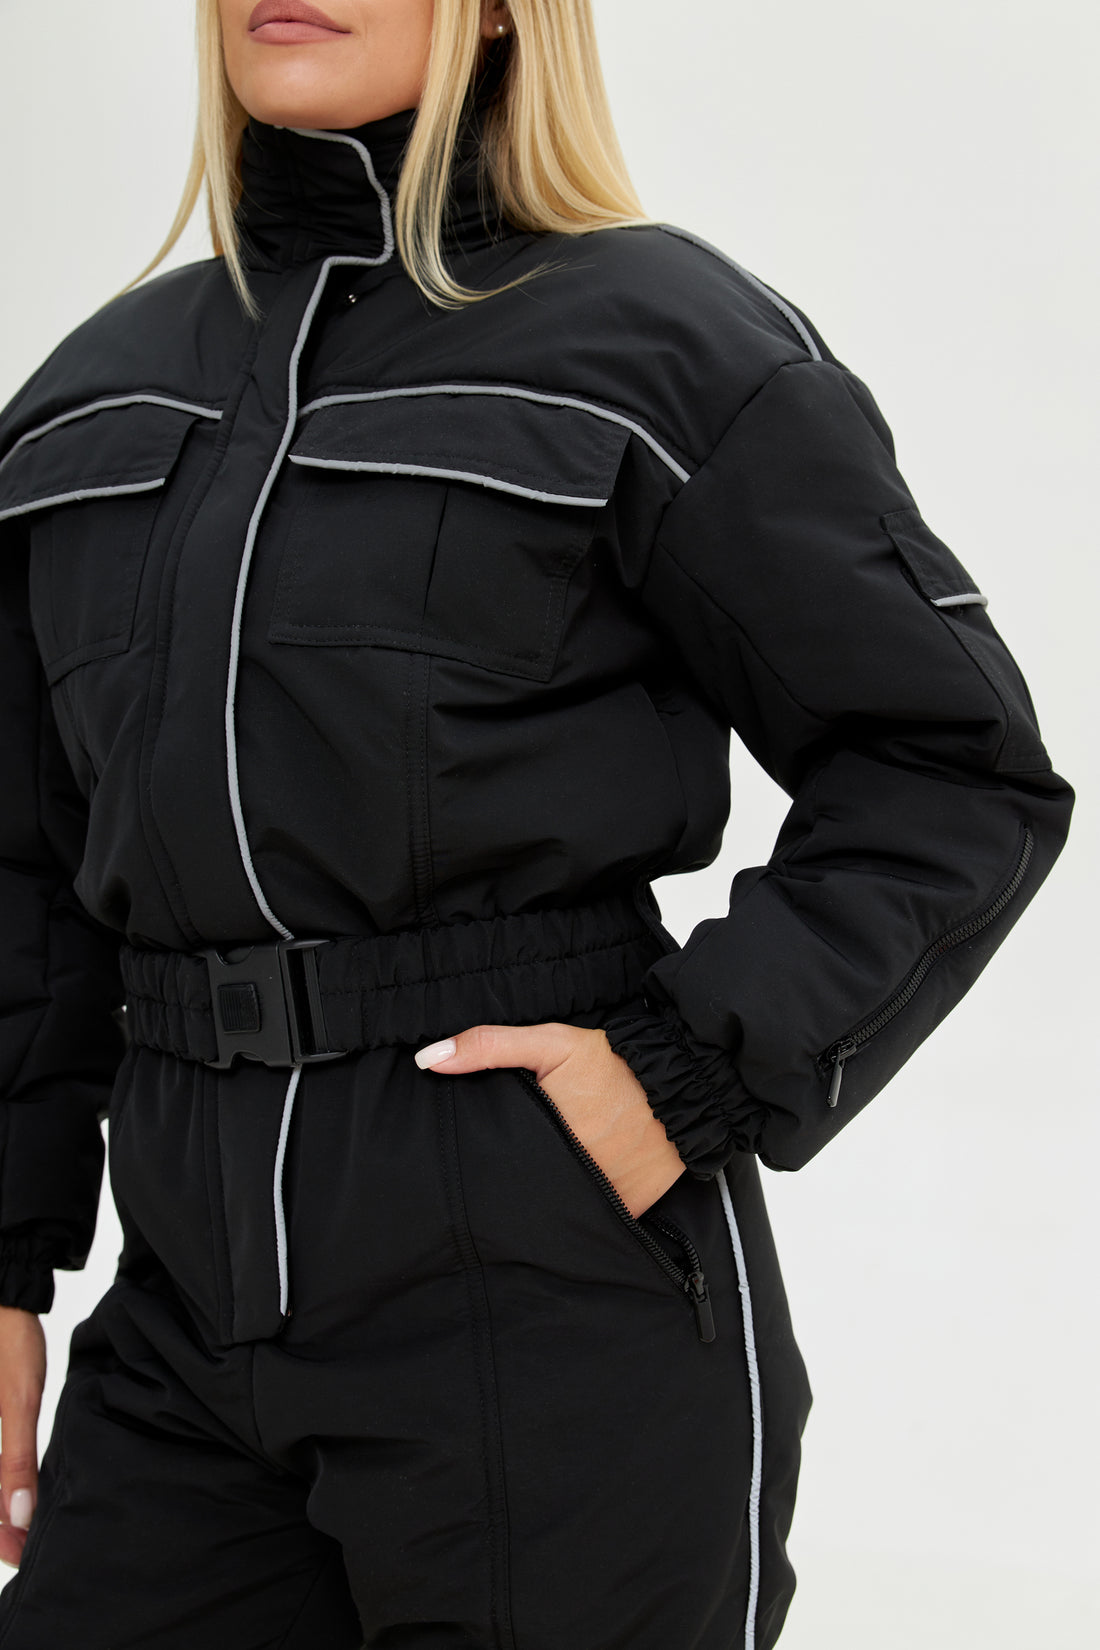 Black ski suit BLANC - BLACK with reflective edging - Ski clothes ladies for ski trip outfit